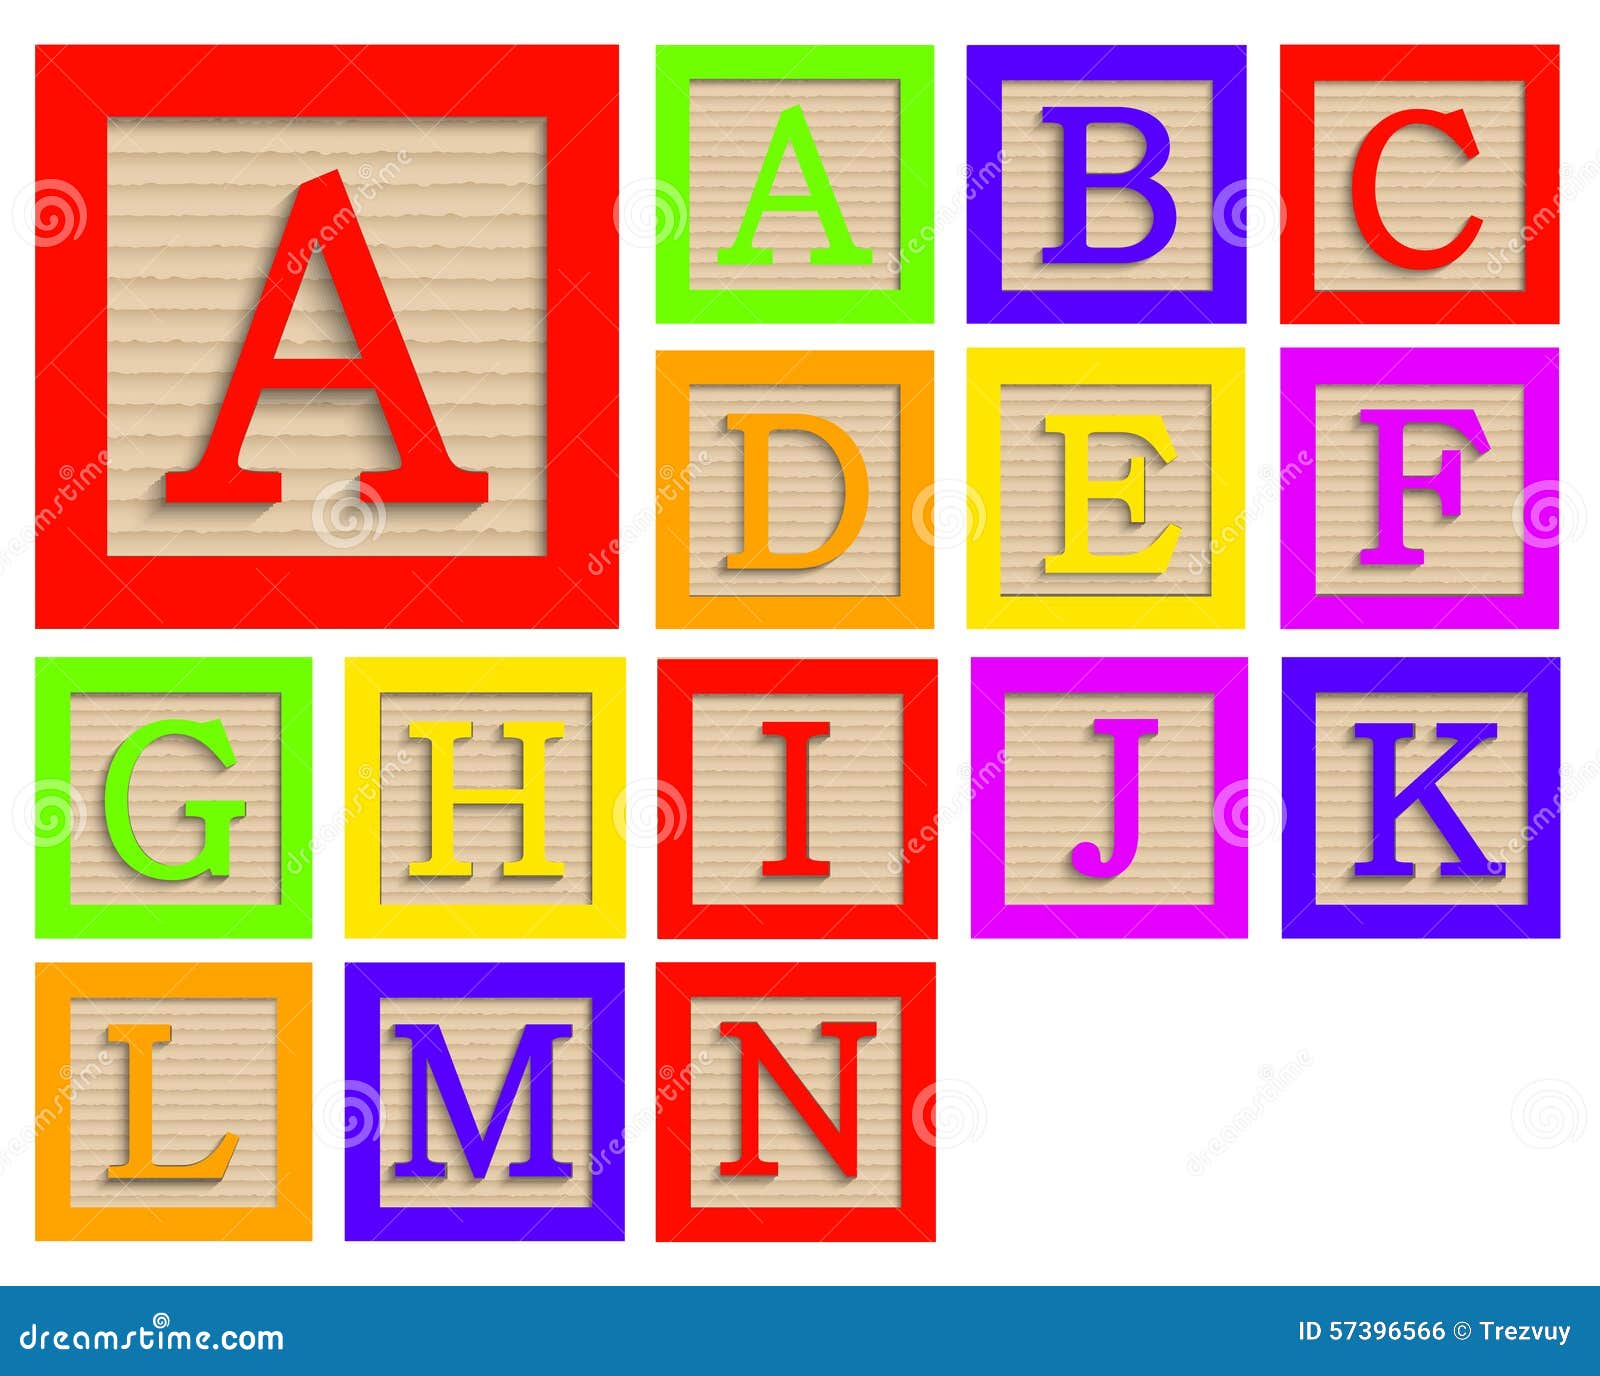 uppercase letters children's wooden alphabet blocks vector graphic